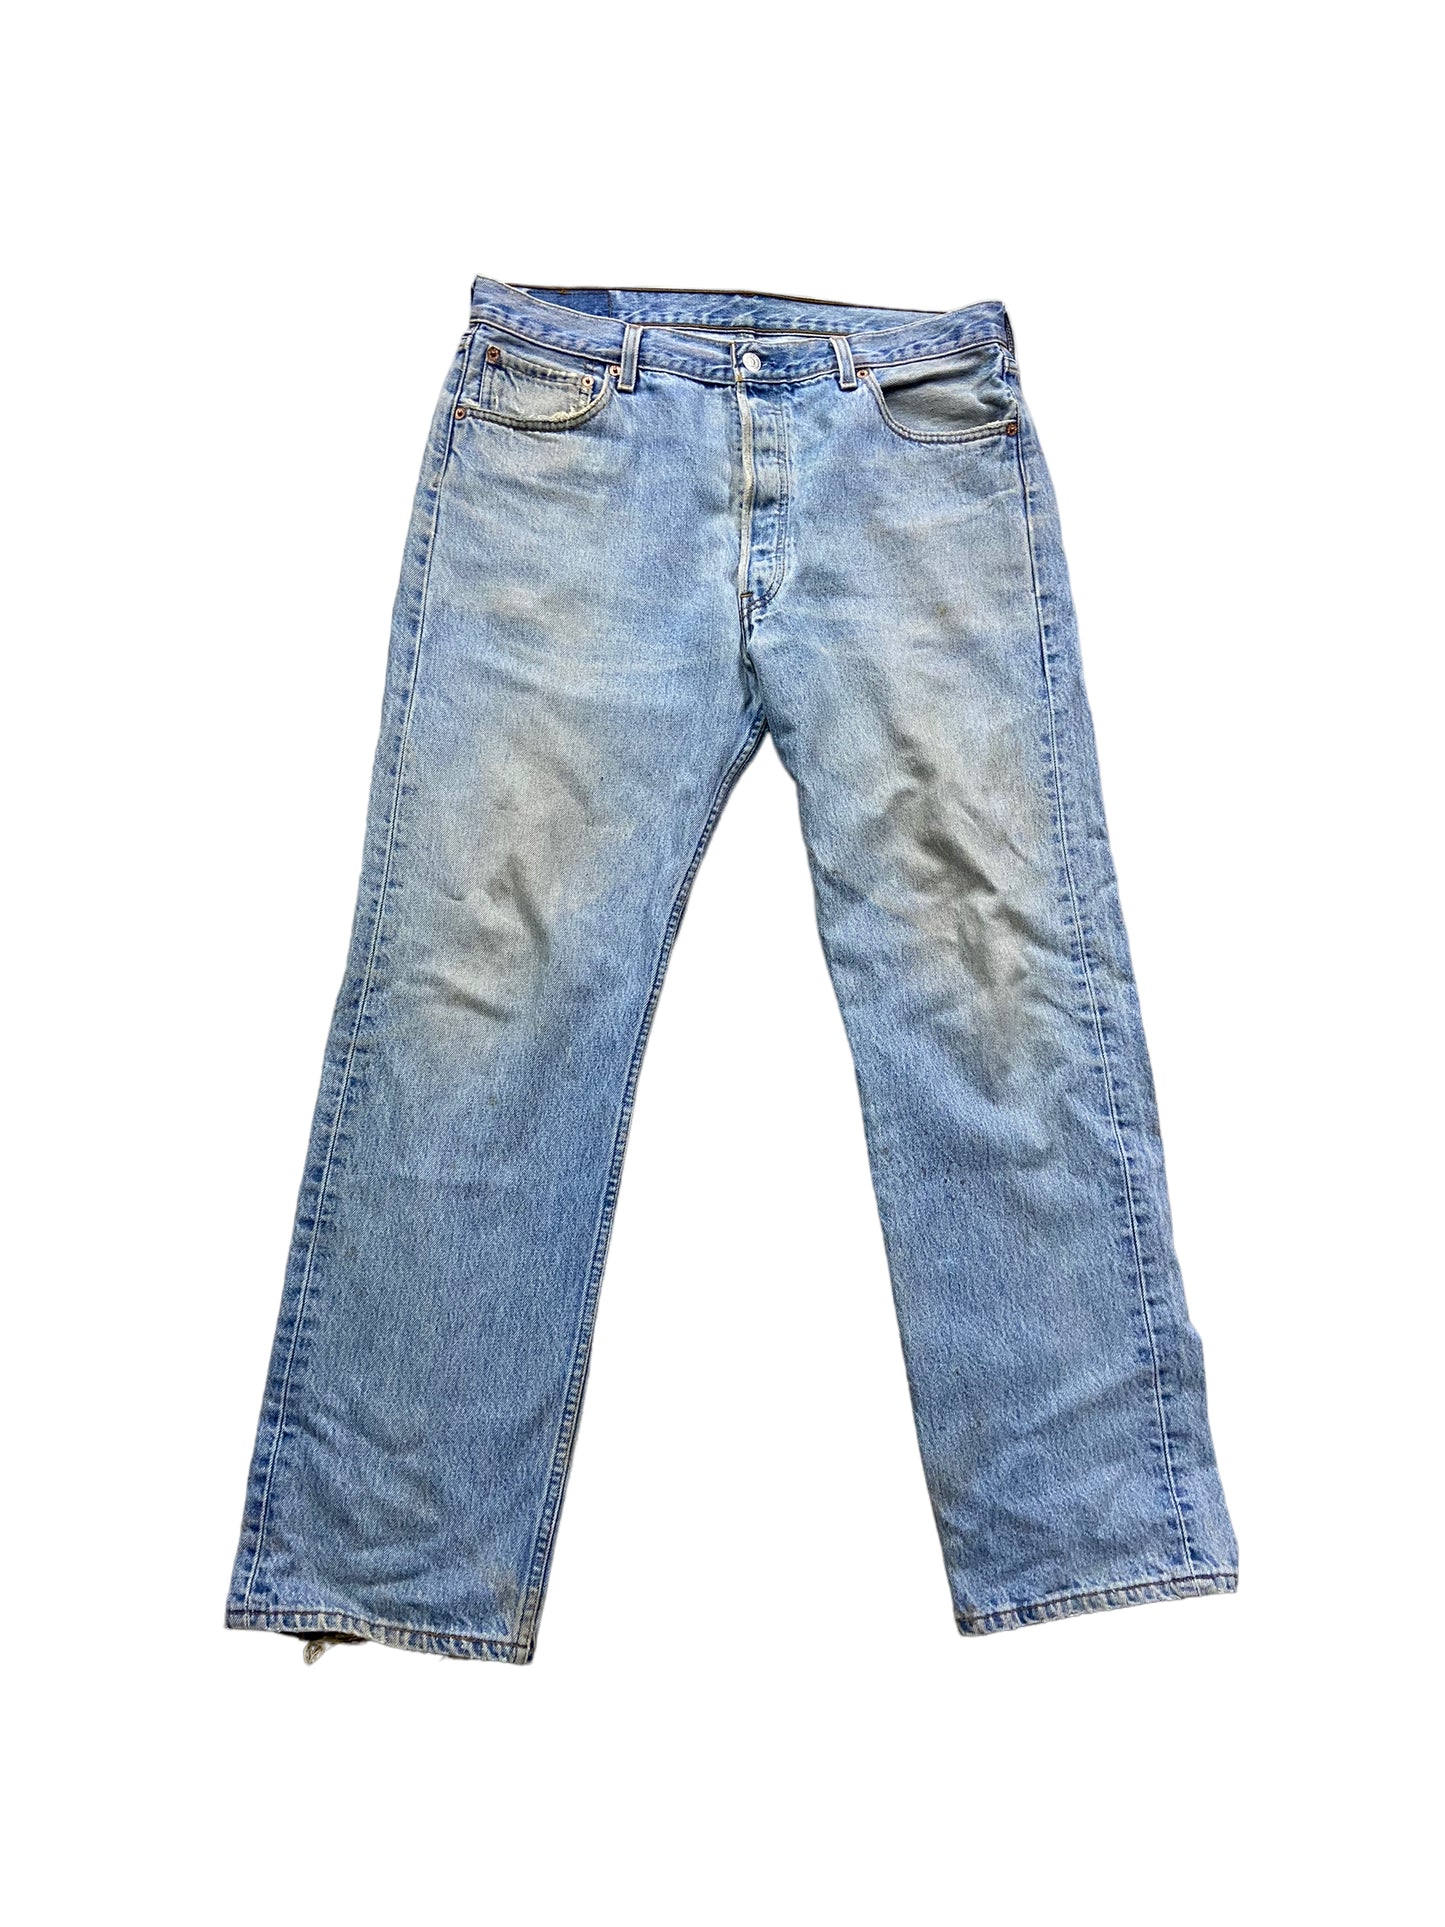 VTG Levi's 501 Light Blue Denim Jeans Sz 36x30